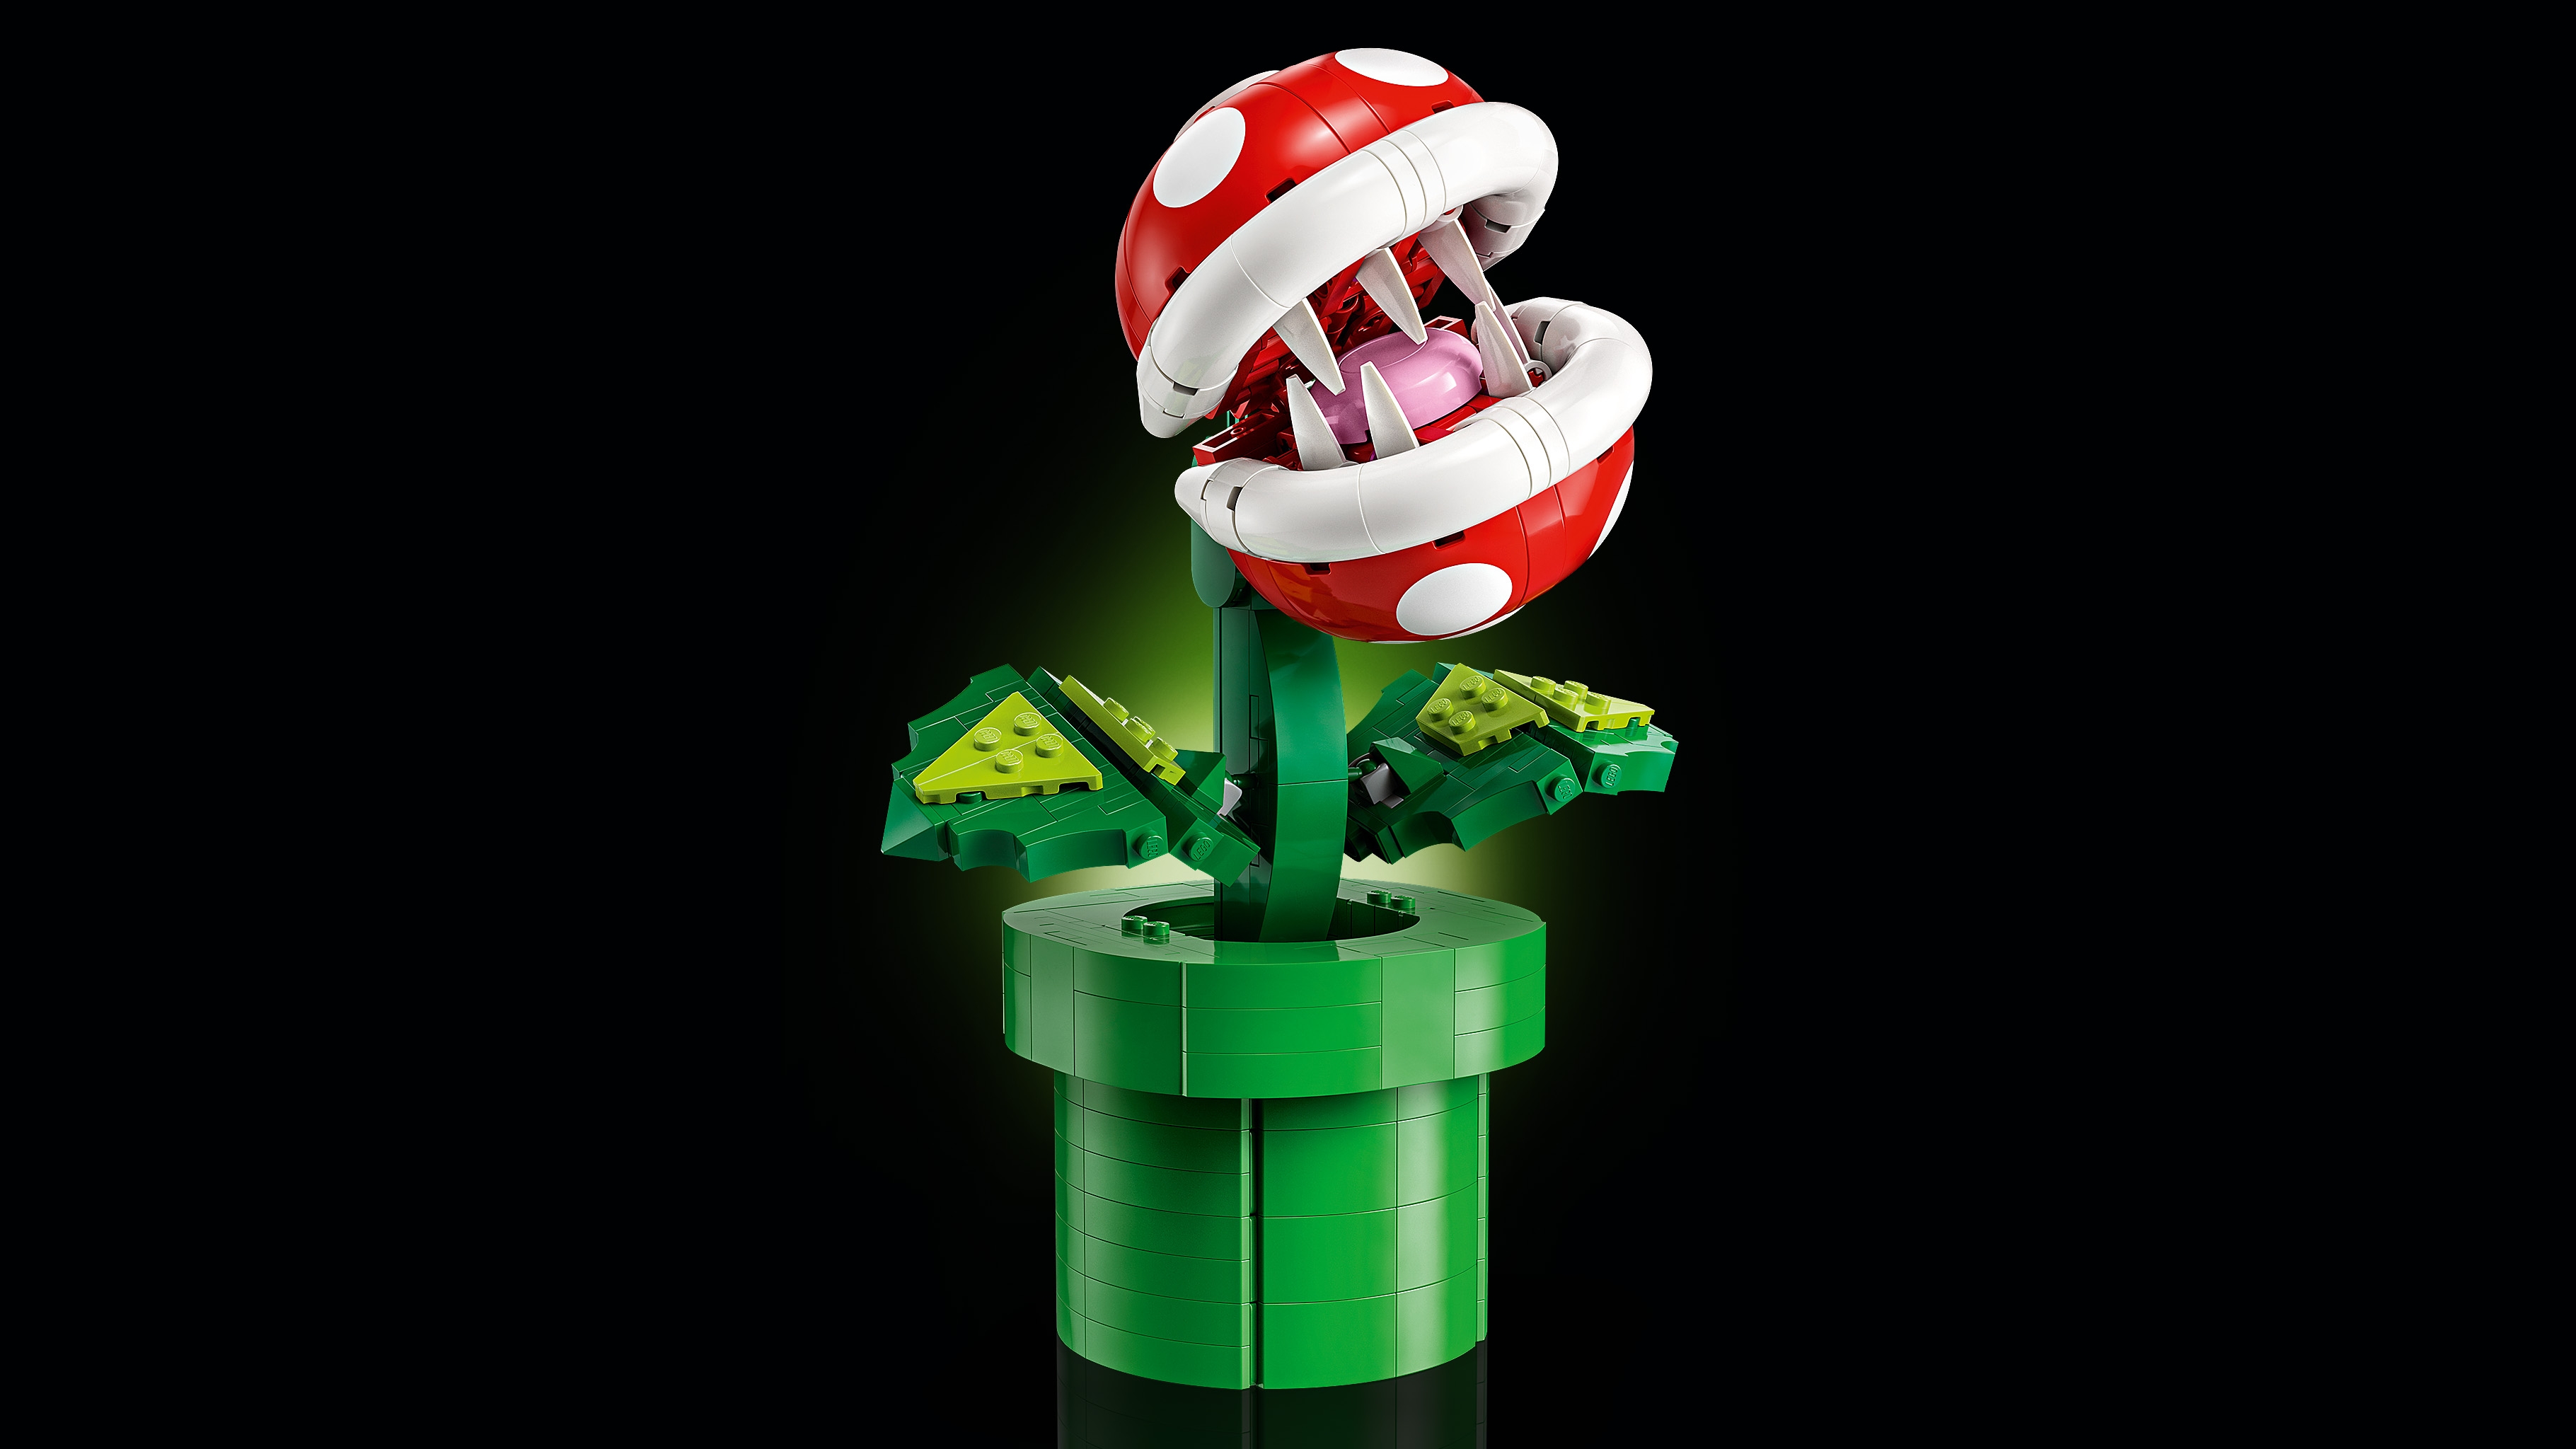 Plante Piranha 71426, LEGO® Super Mario™